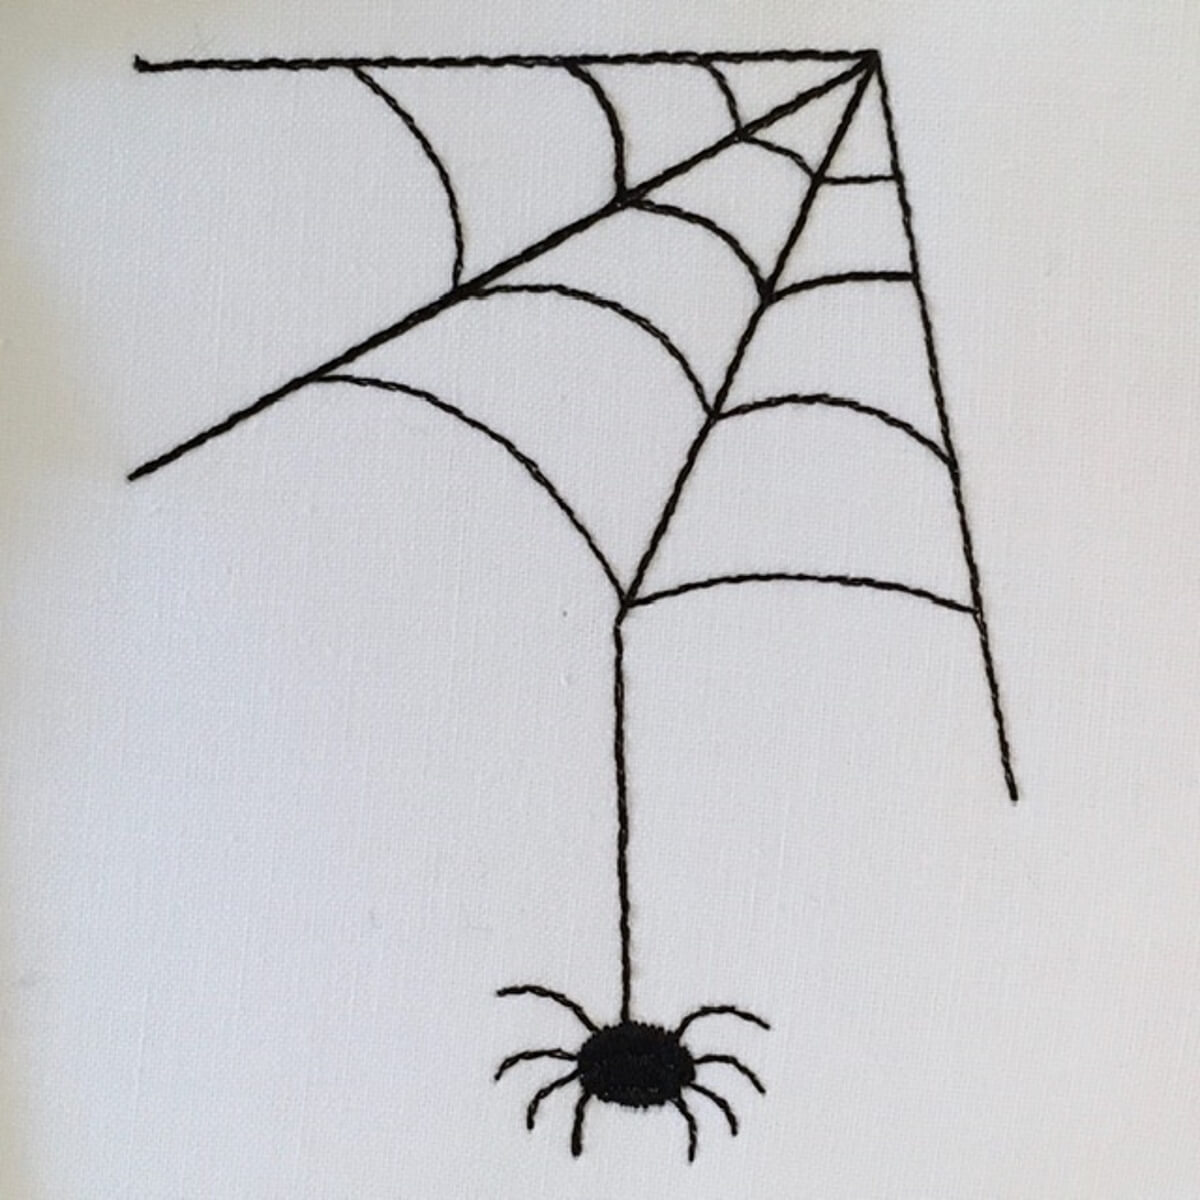 Stickdesign Halloween: Spider and Web (Download)